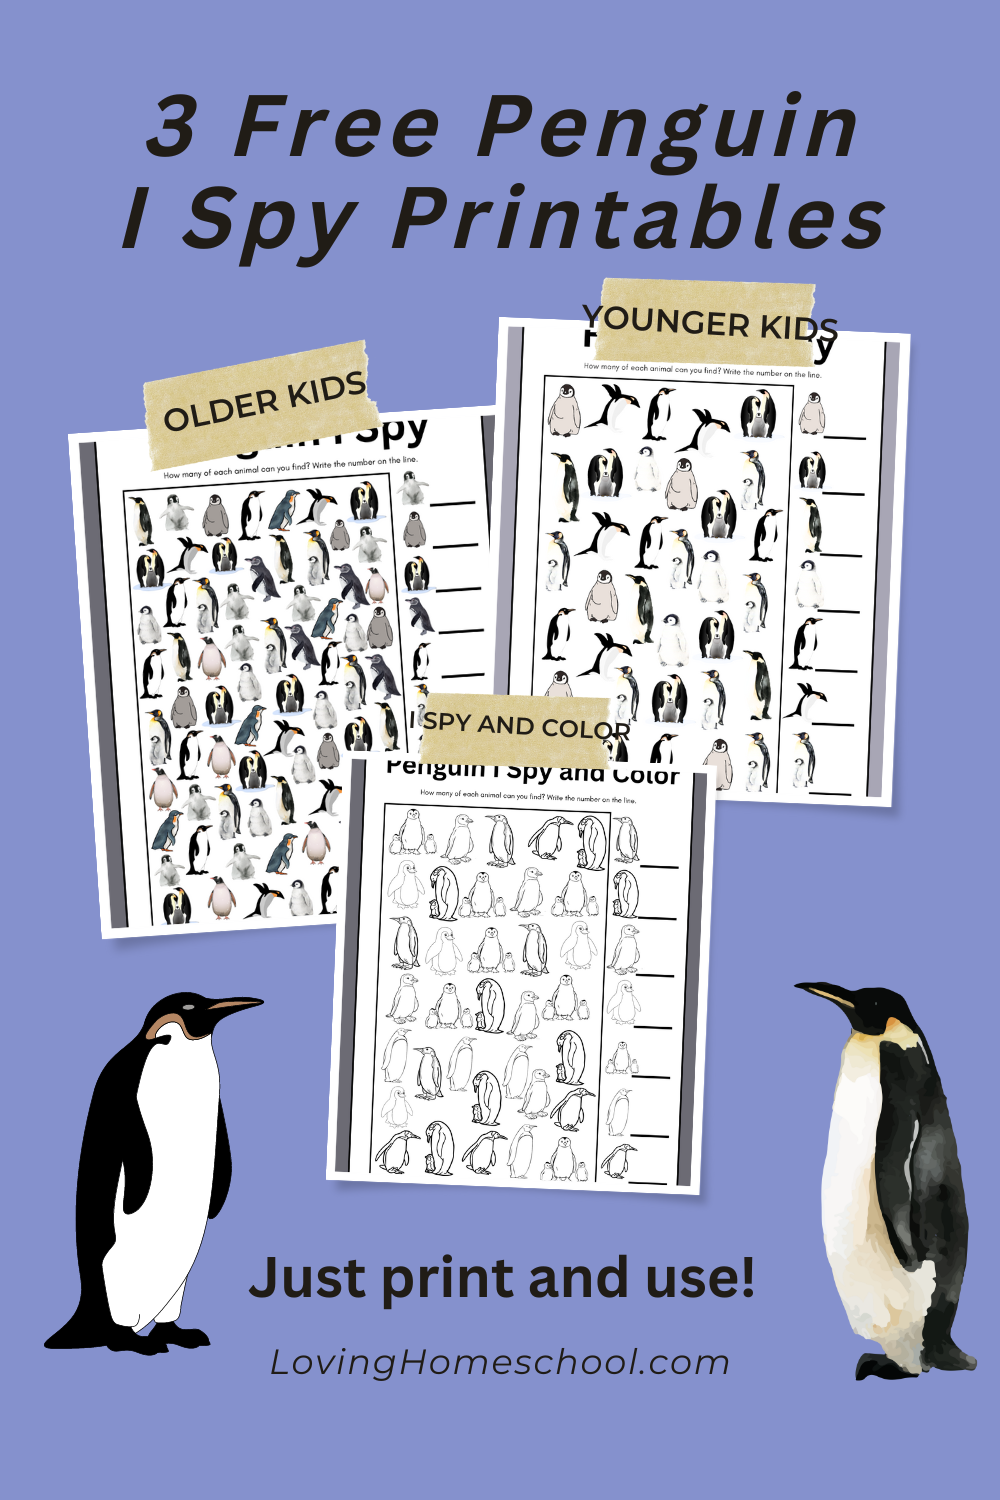 Penguin I Spy Printables Pinterest Pin